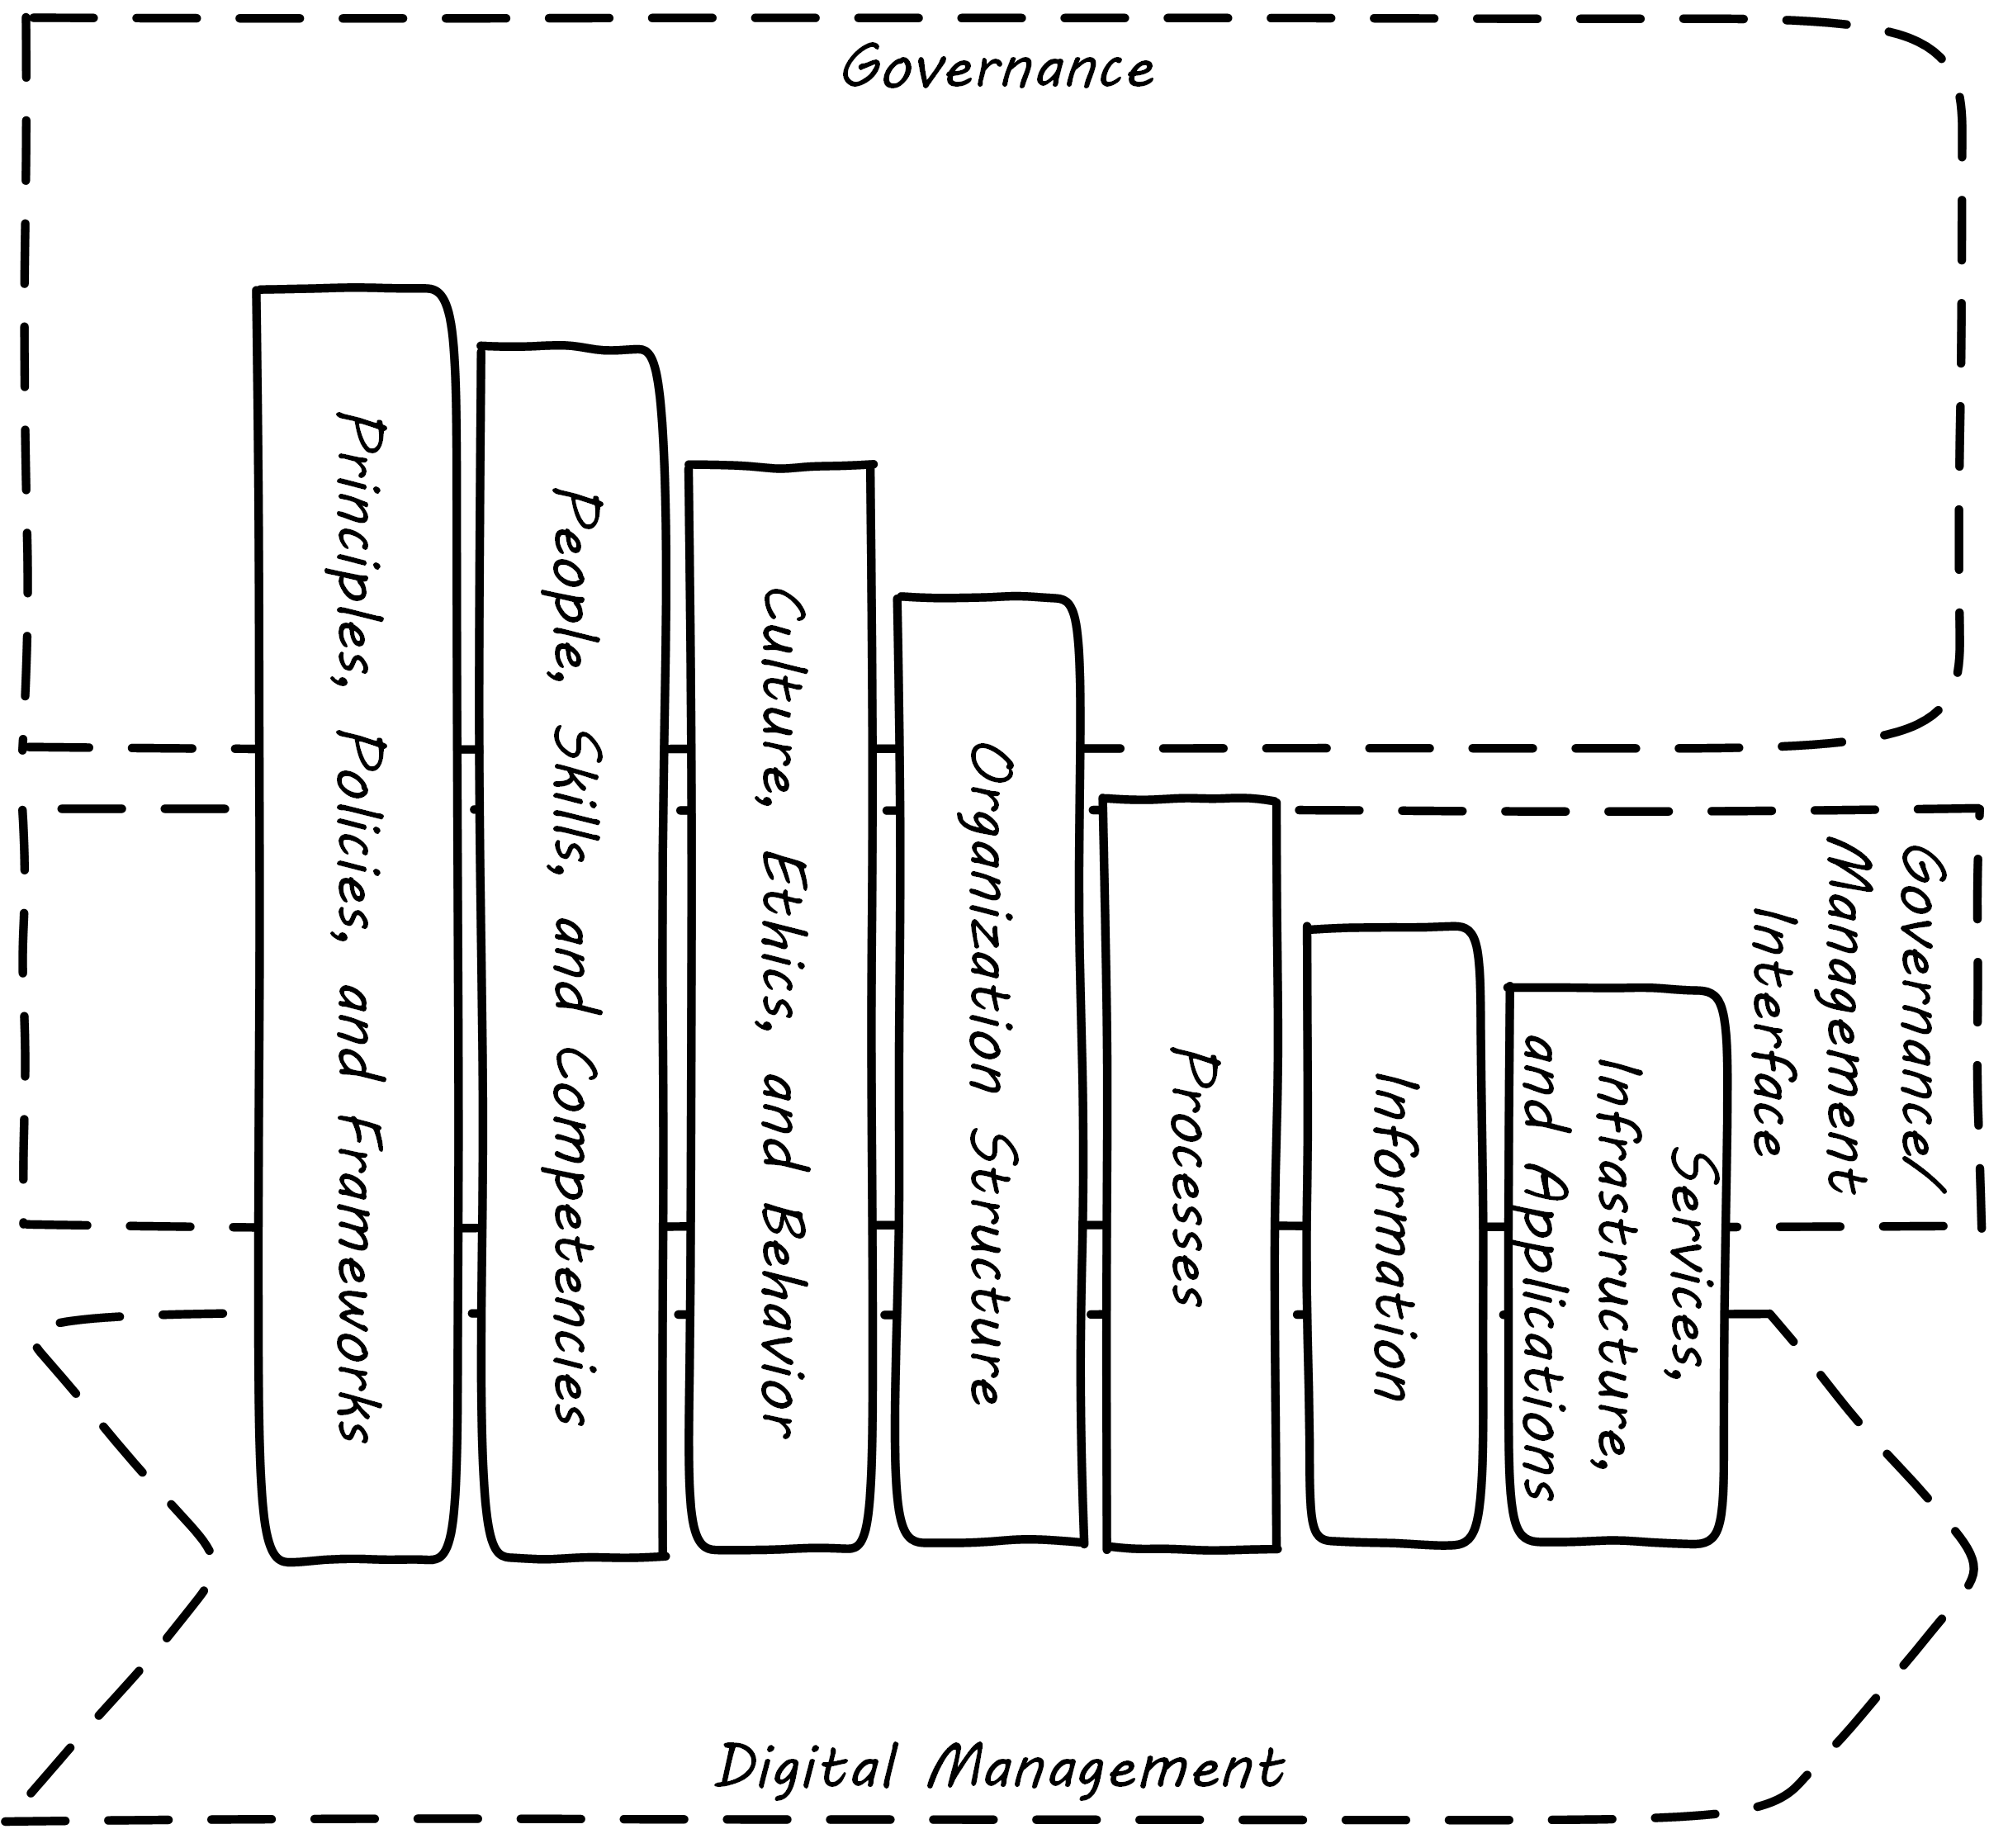 Governance elements